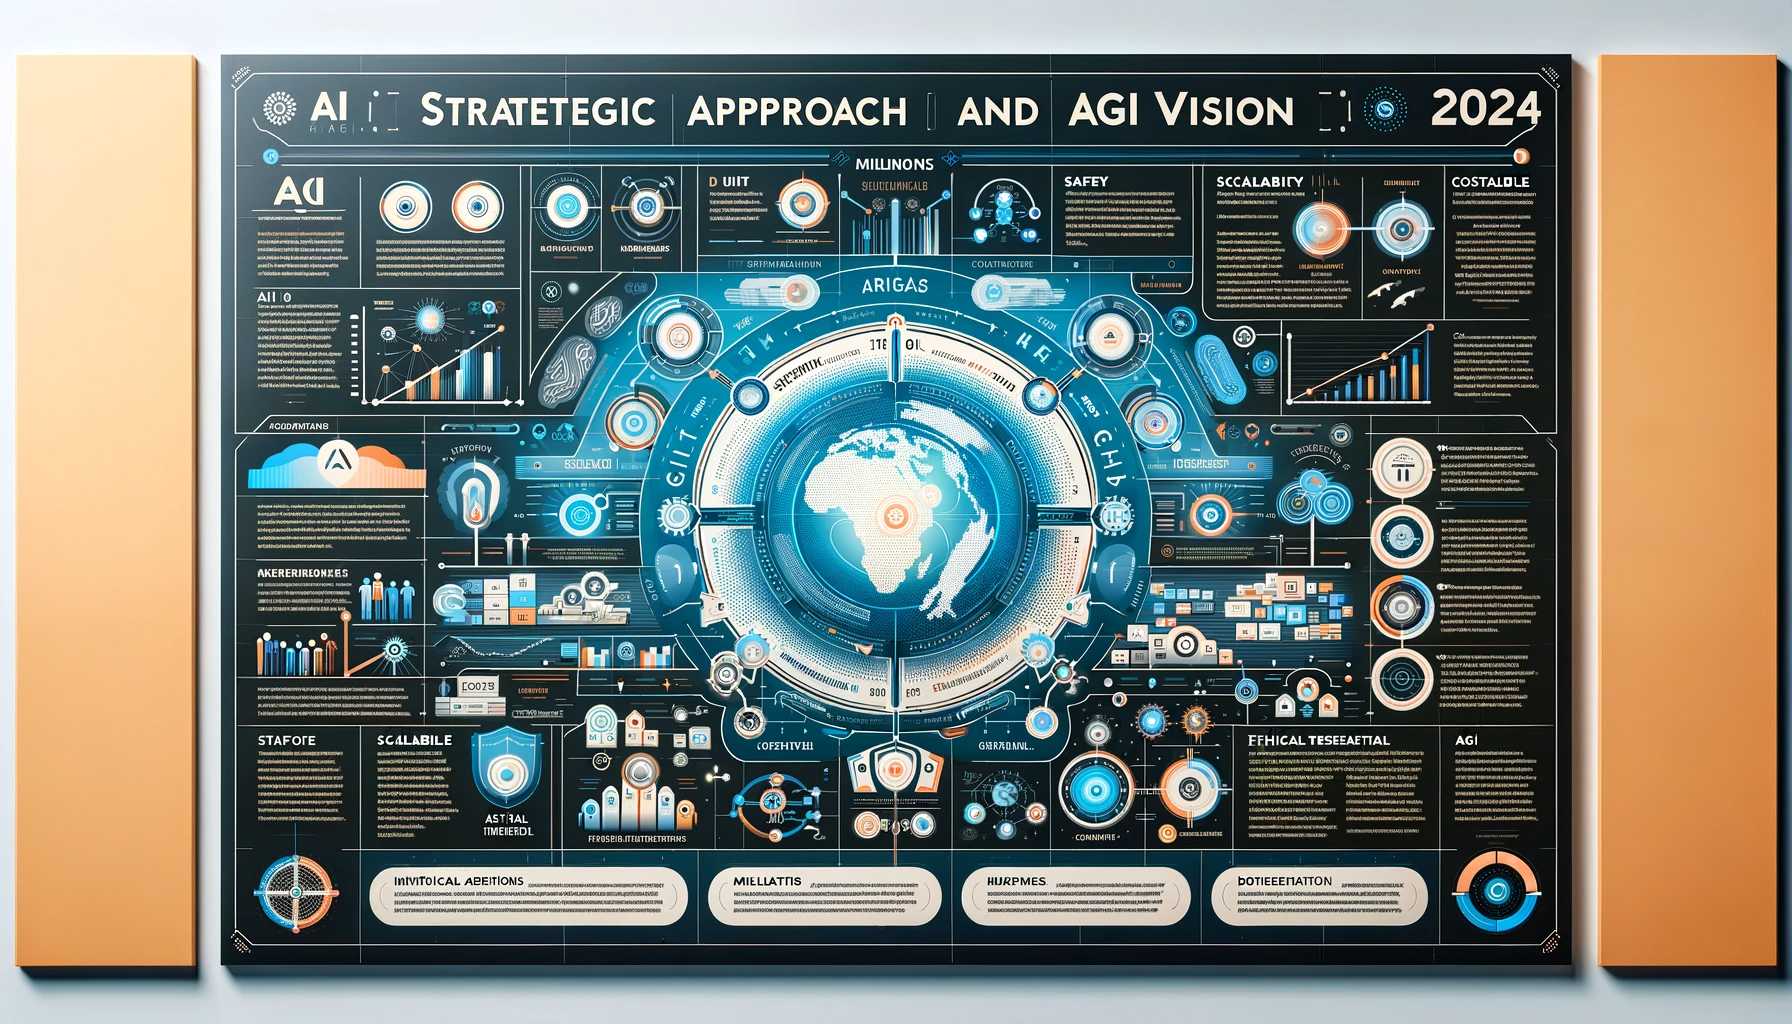 The Strategic Approach and AGI Vision of openAI